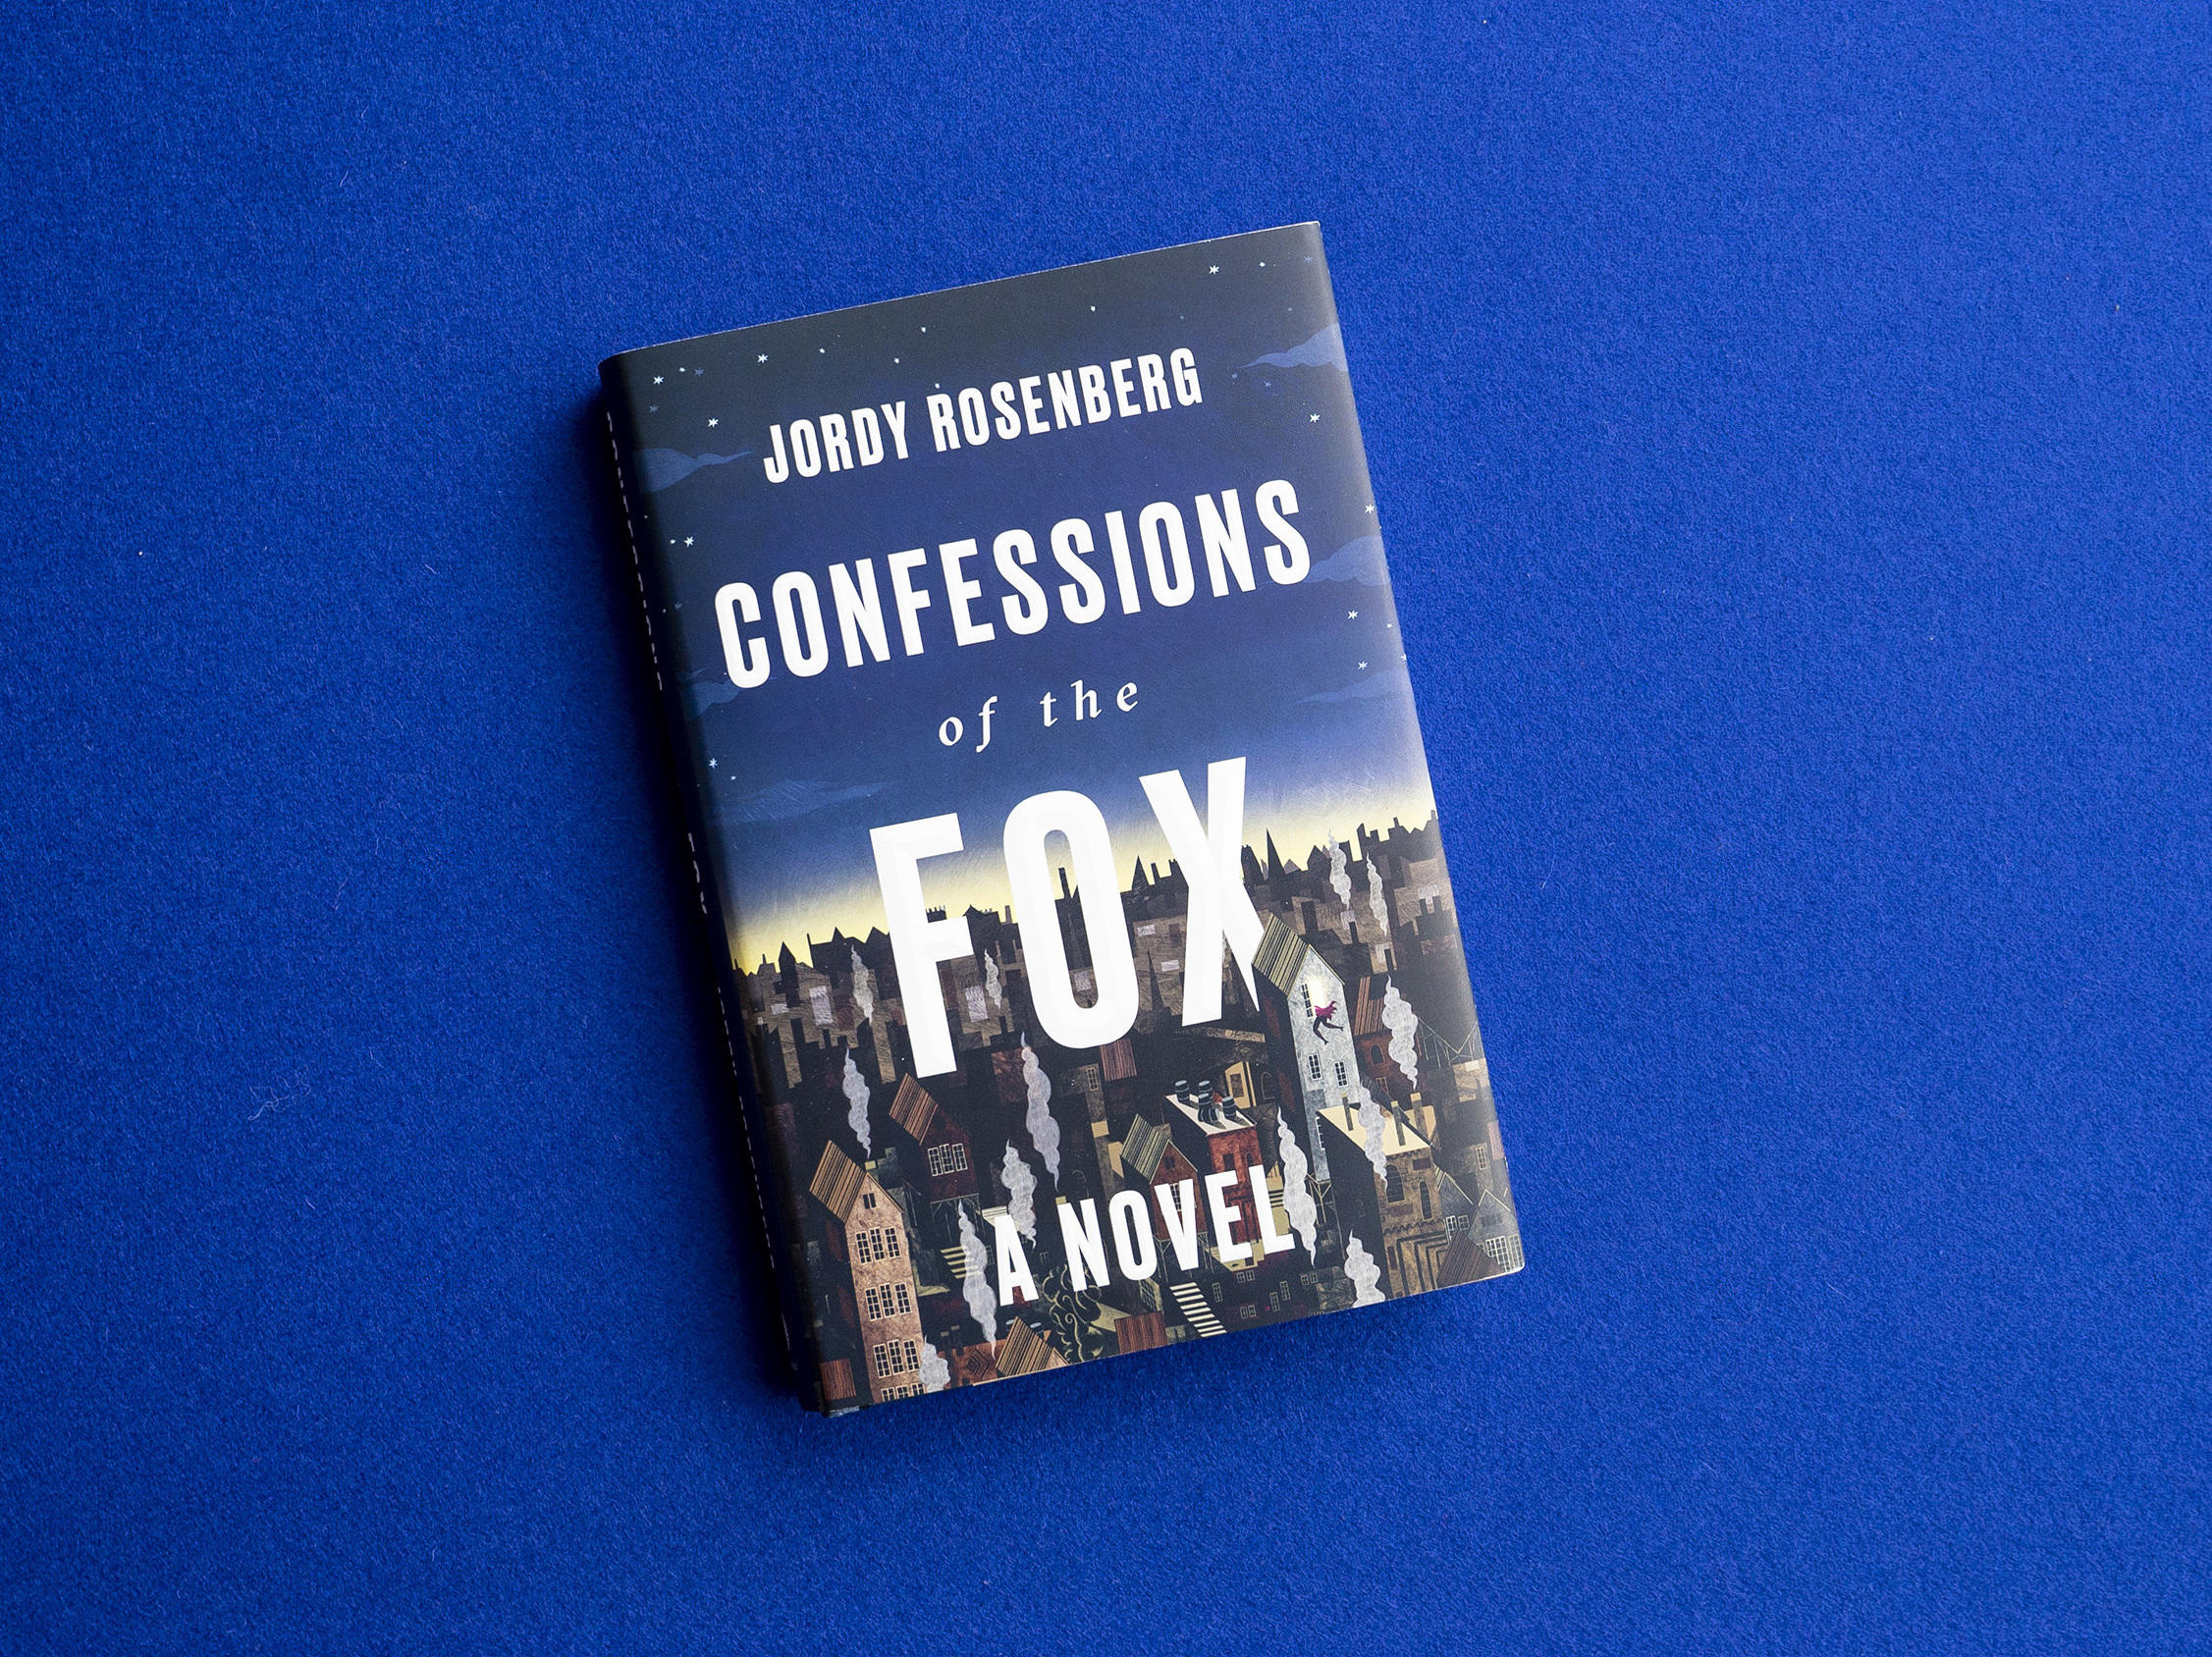 jordy rosenberg confessions of the fox